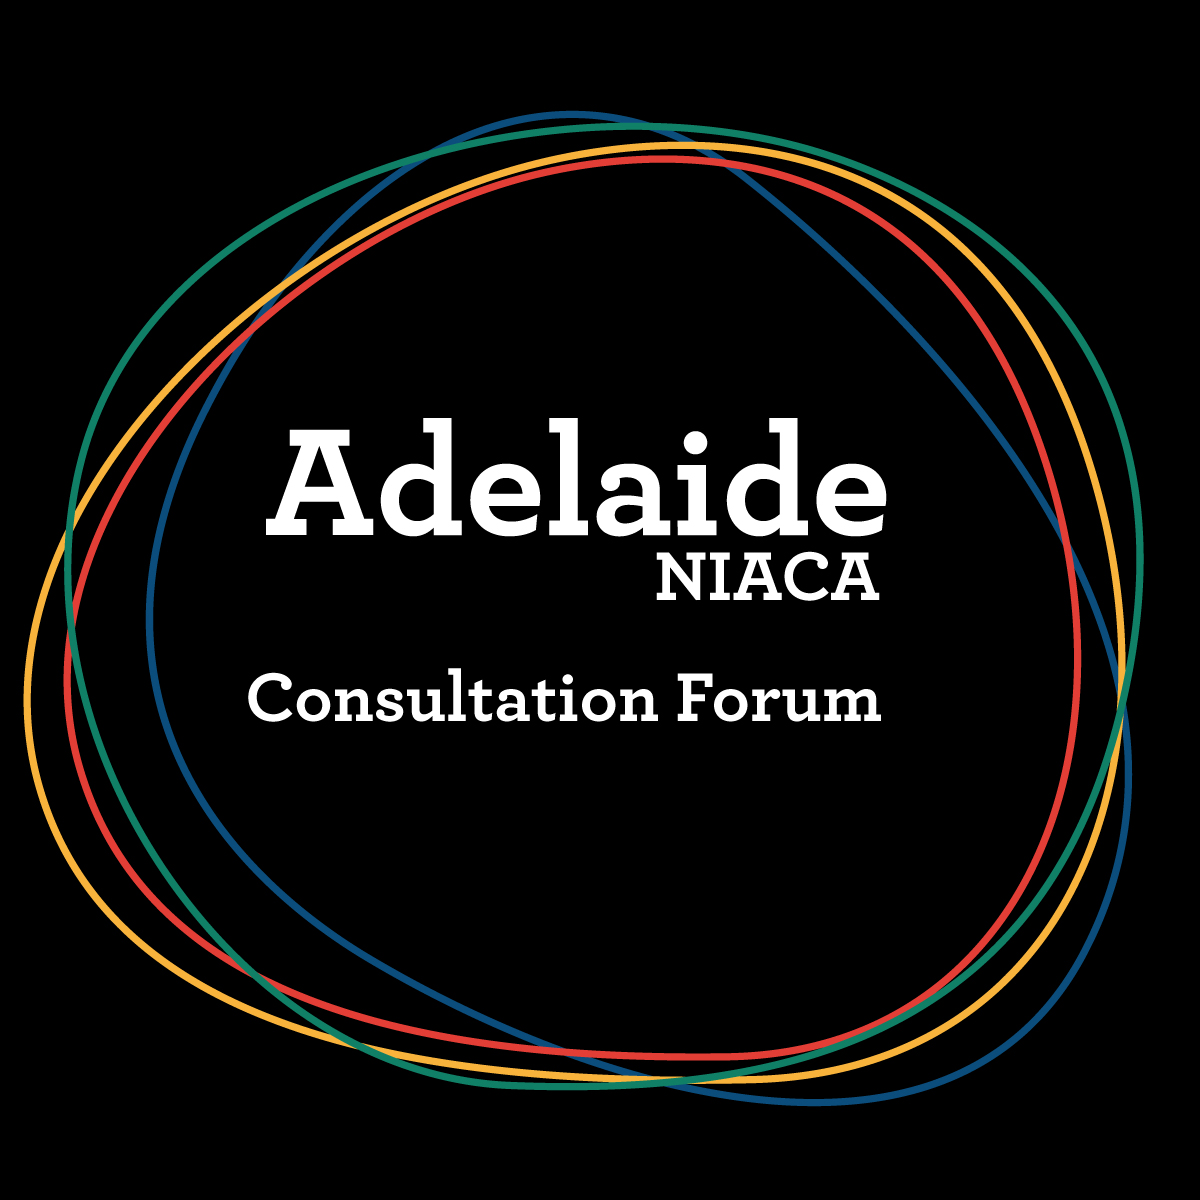 Adelaide NIACA Consultation Forum